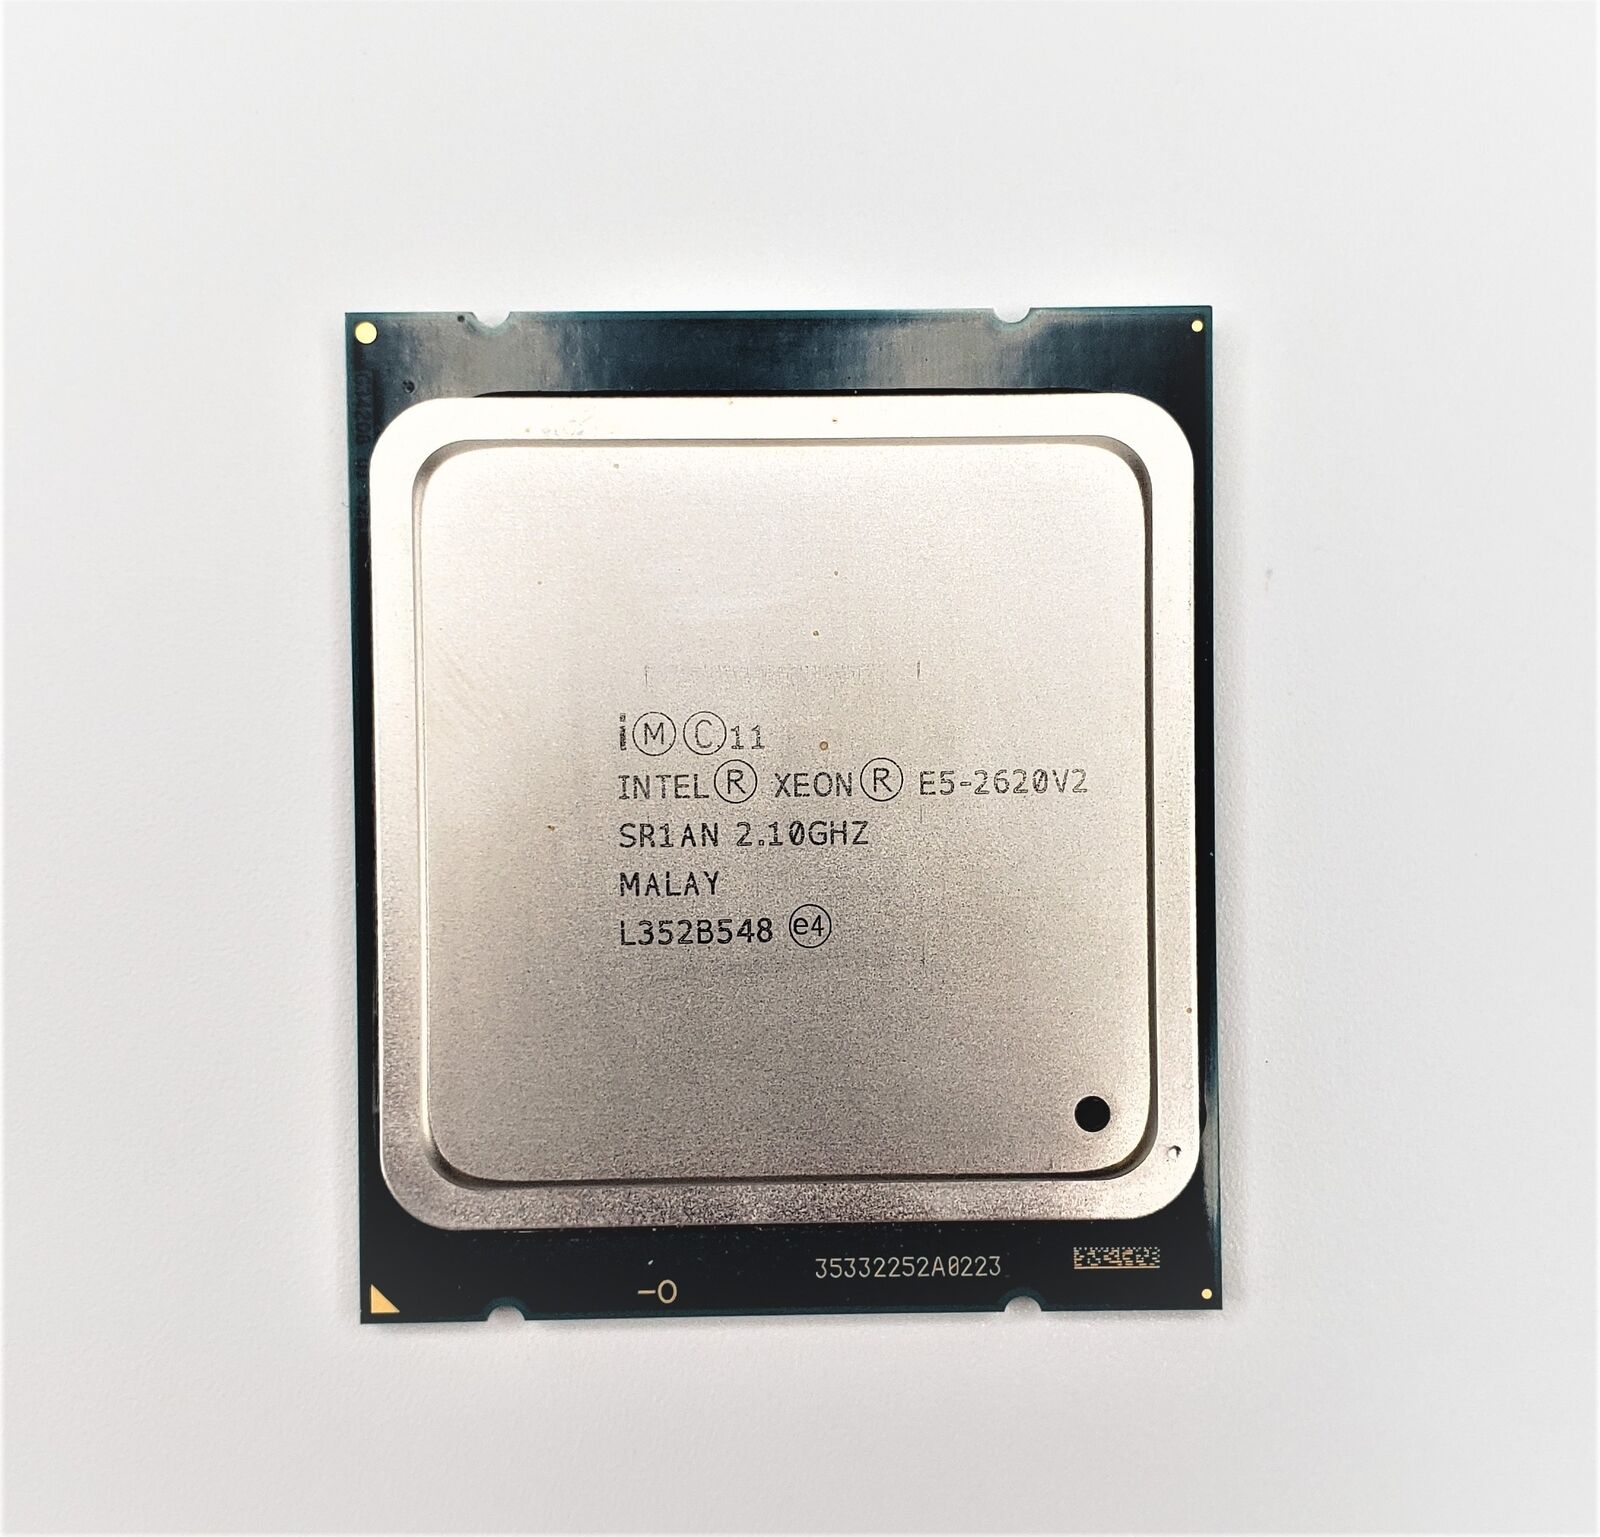 Intel Xeon E5-2620 V2 2.10GHz 4 Core 15MB Socket LGA2011 Cpu Processor SR1AN